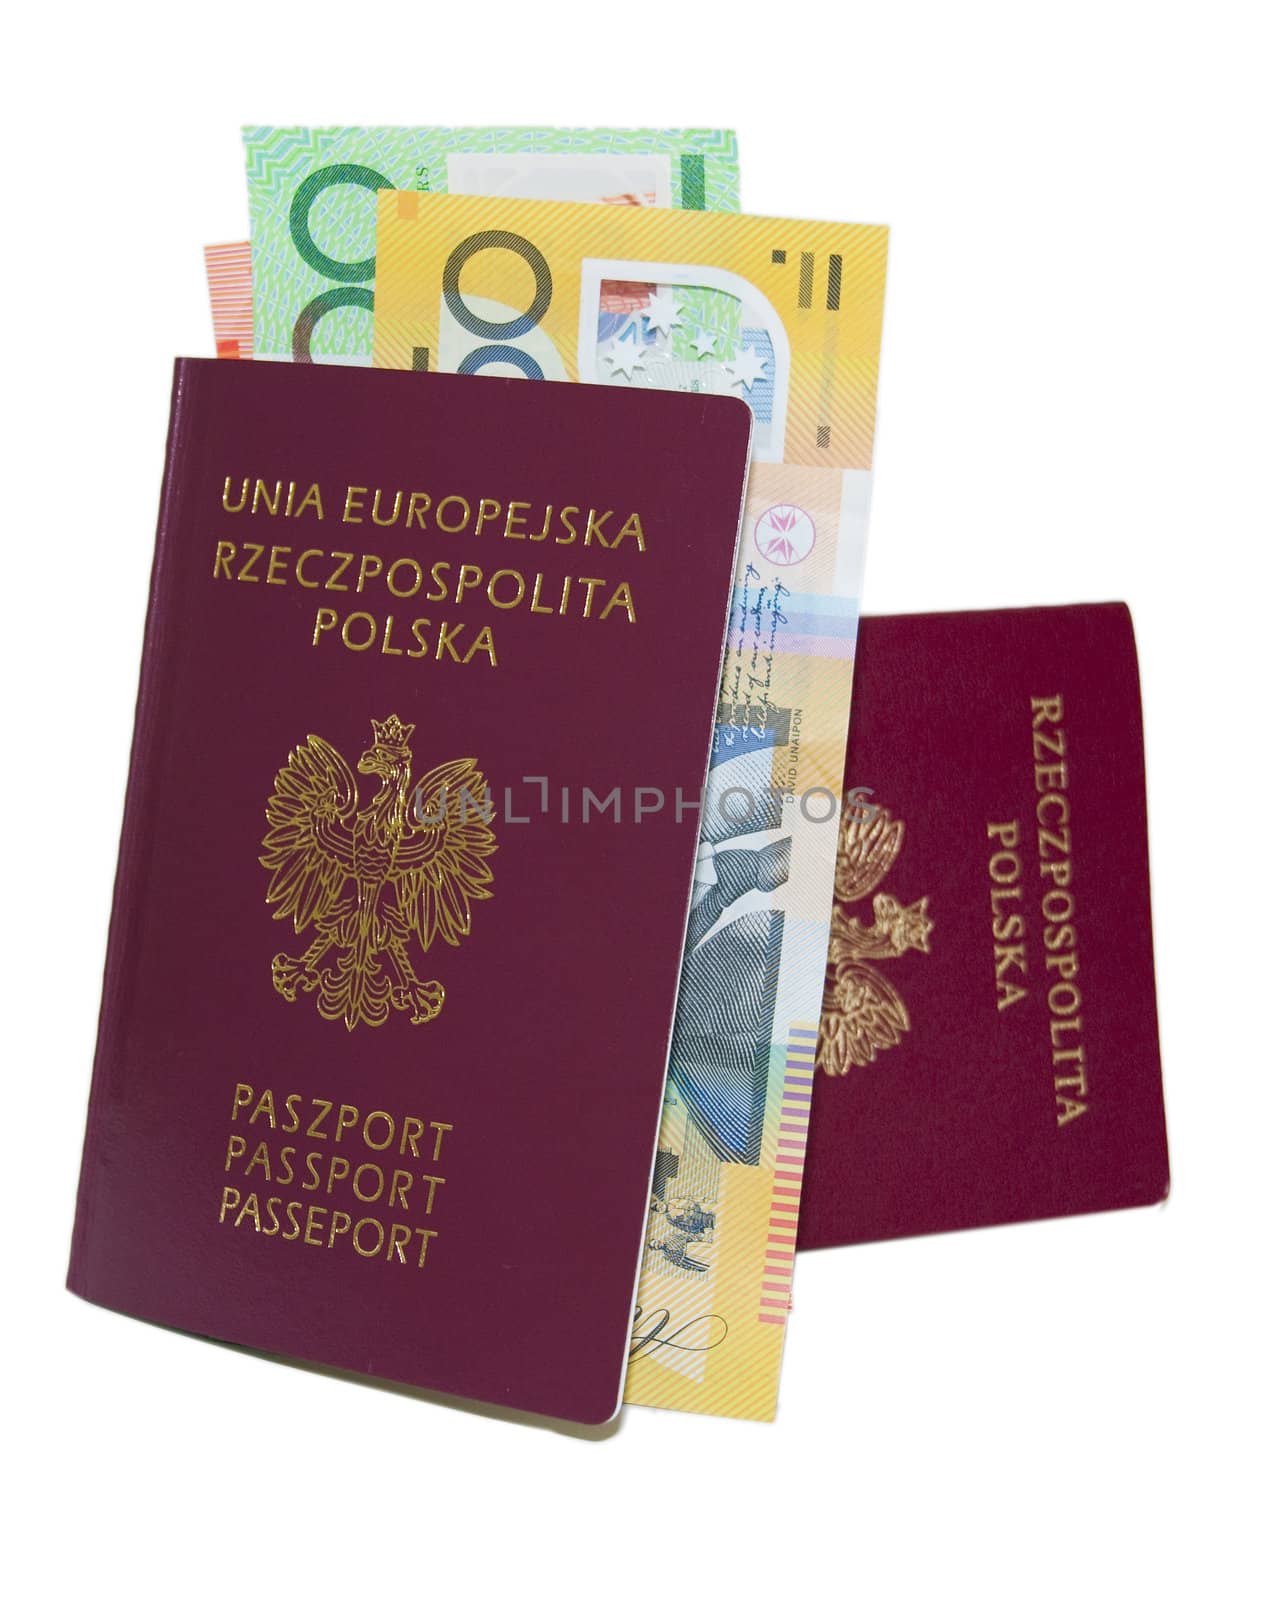 red passport, Australian money, isolated on white. by wojciechkozlowski